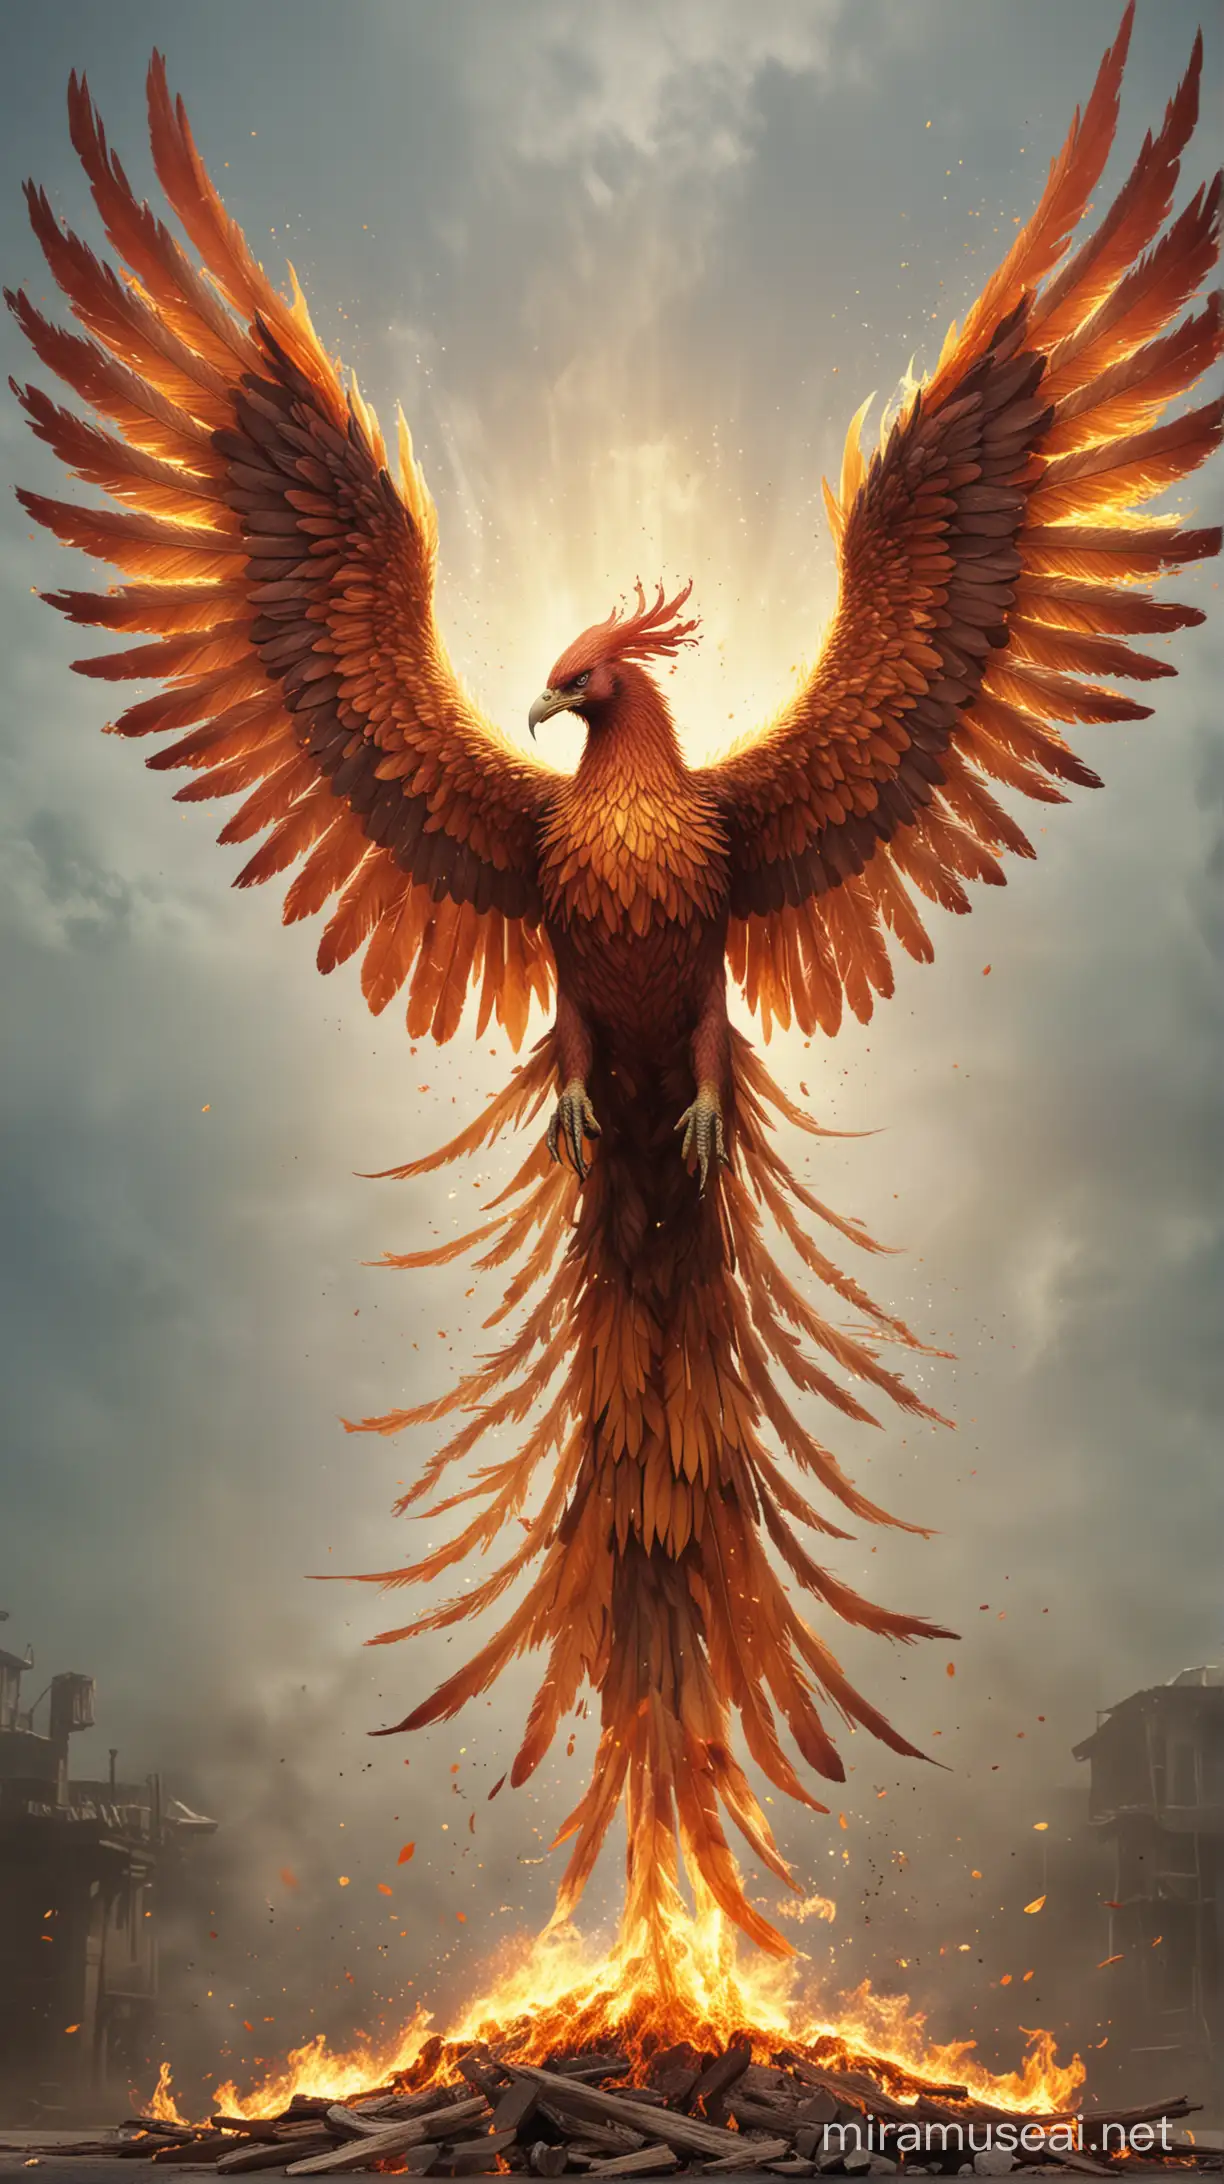 Majestic Phoenix with Spread Wings